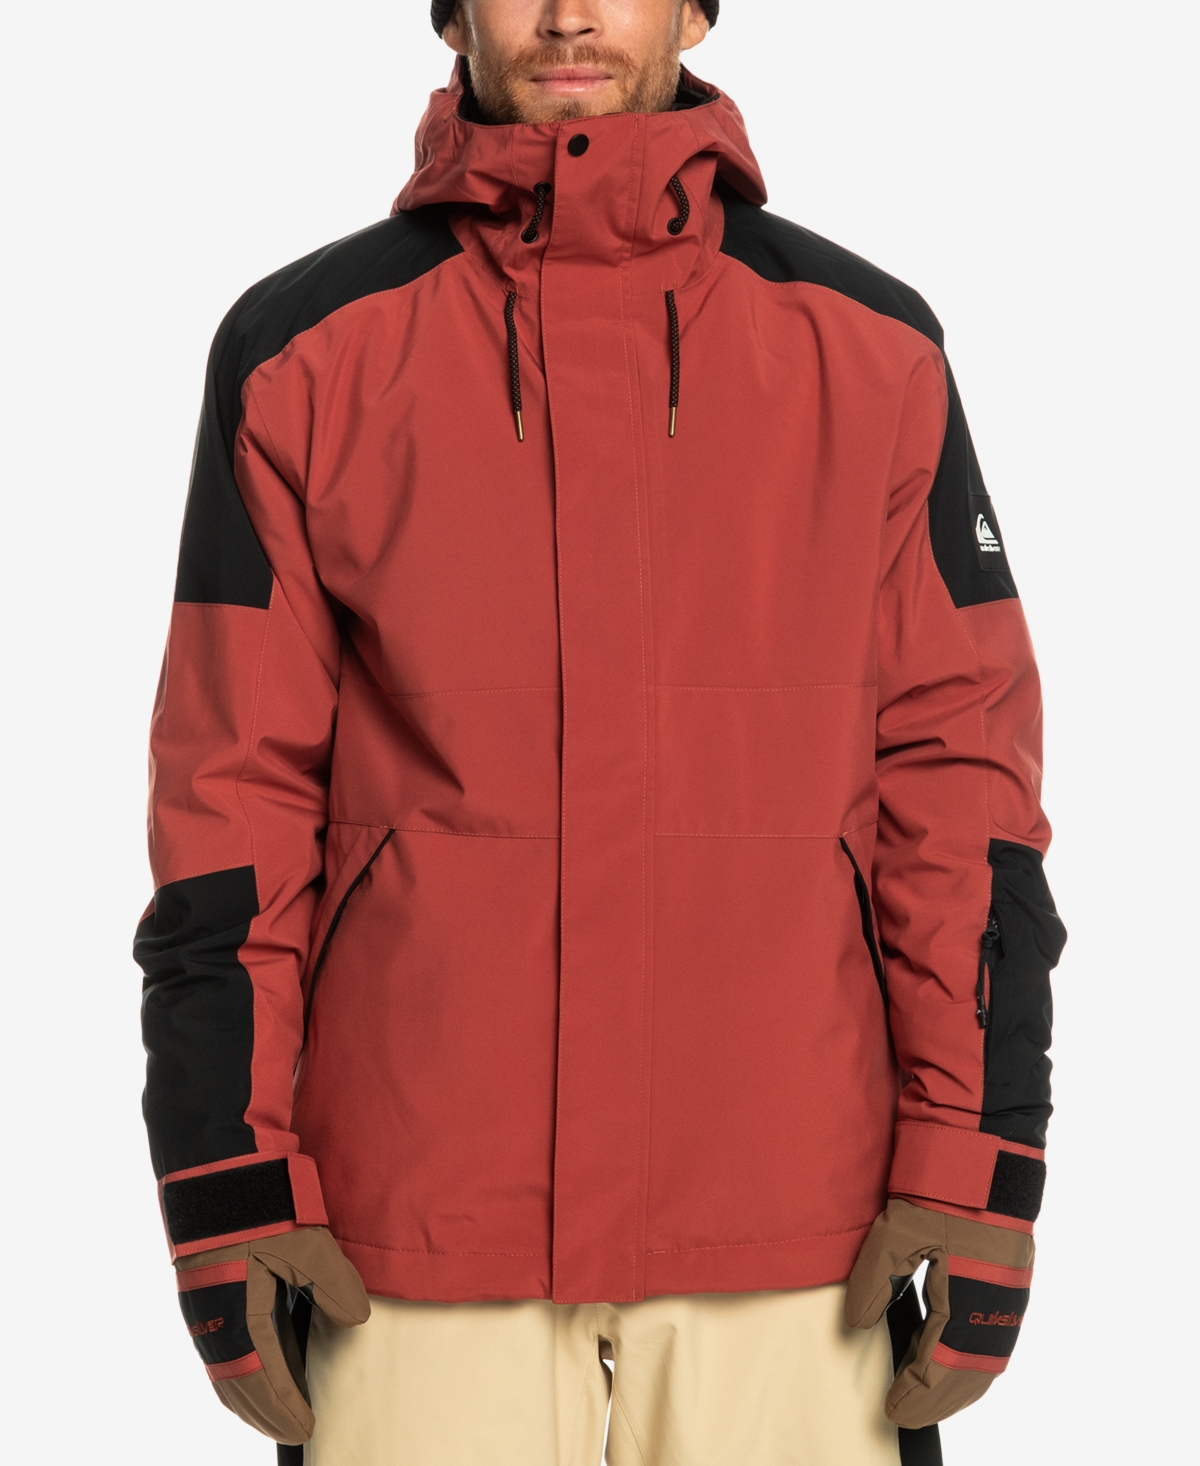 Men's Snow Radicalo Hooded Jacket - True Black